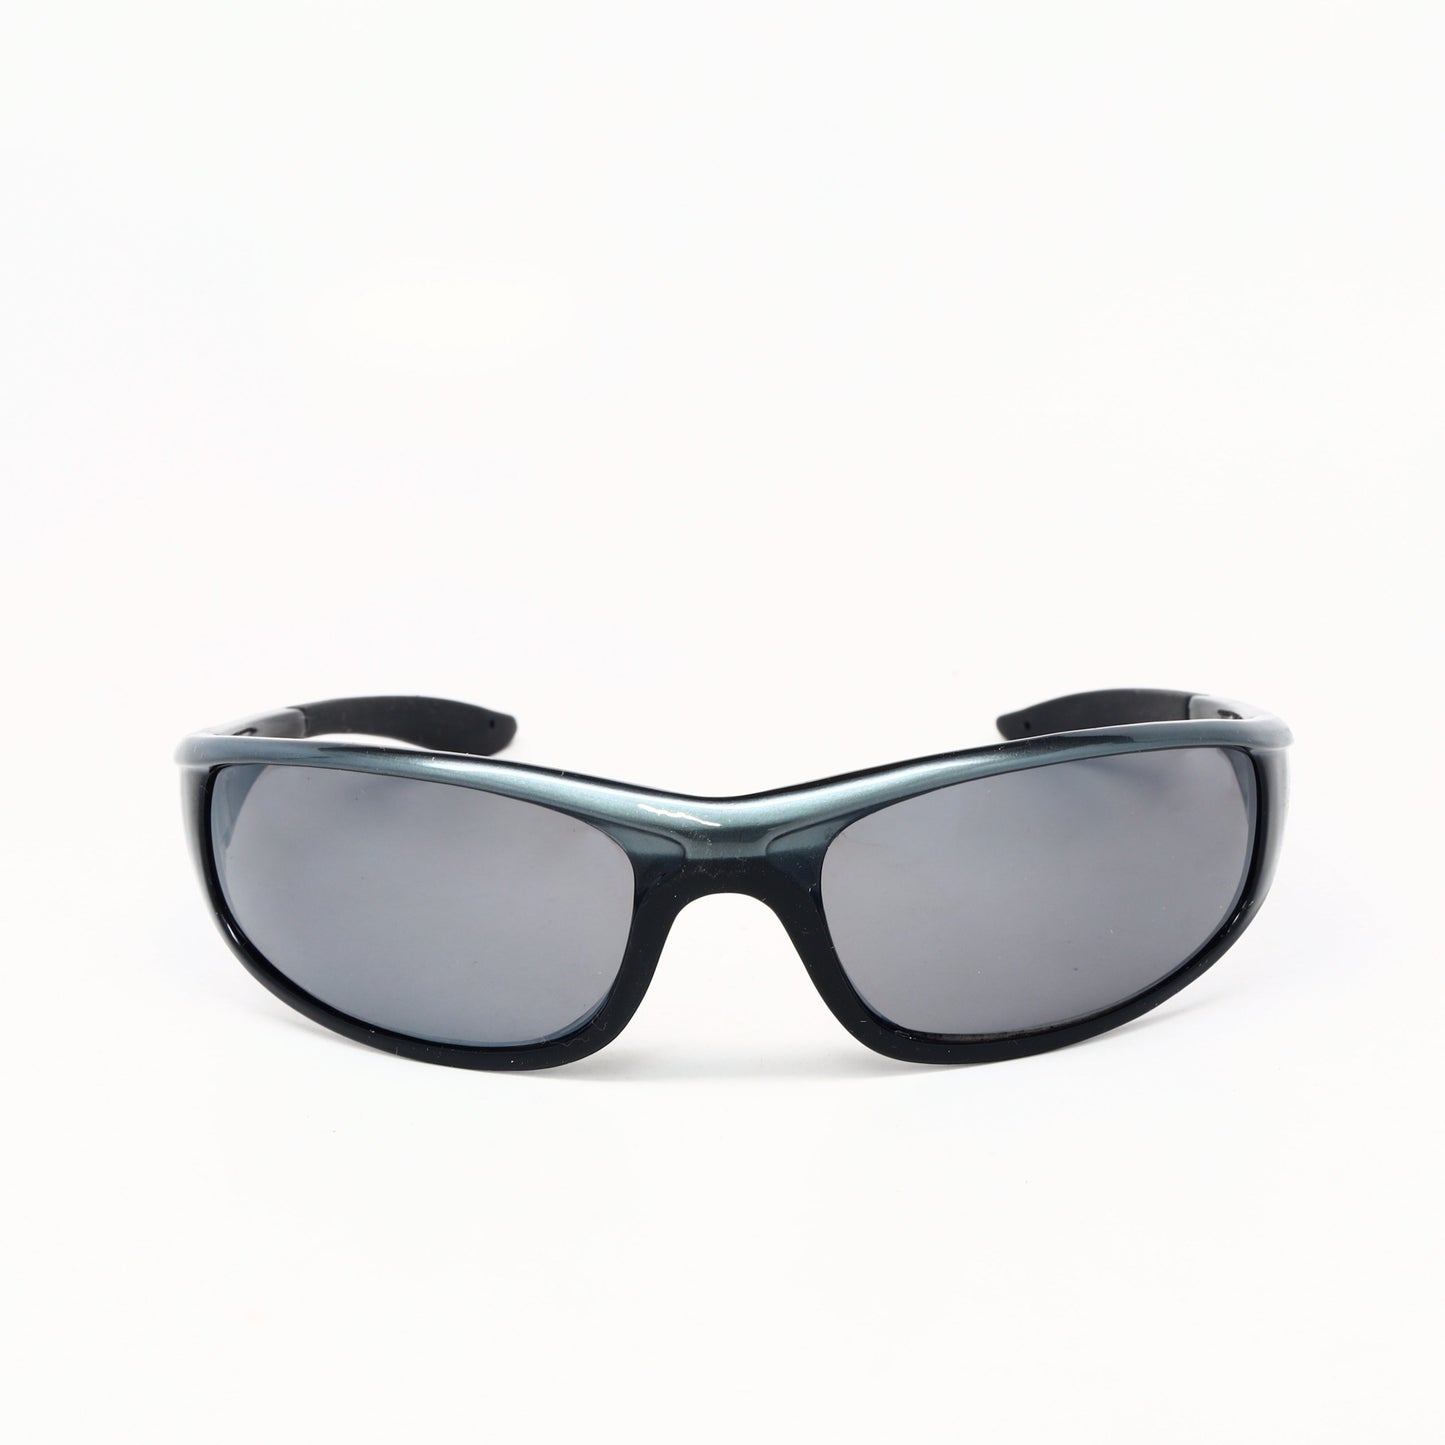 Prototype 5 X-Ray Deadstock Two Tone Wraparound Visor Sunglasses - Grey